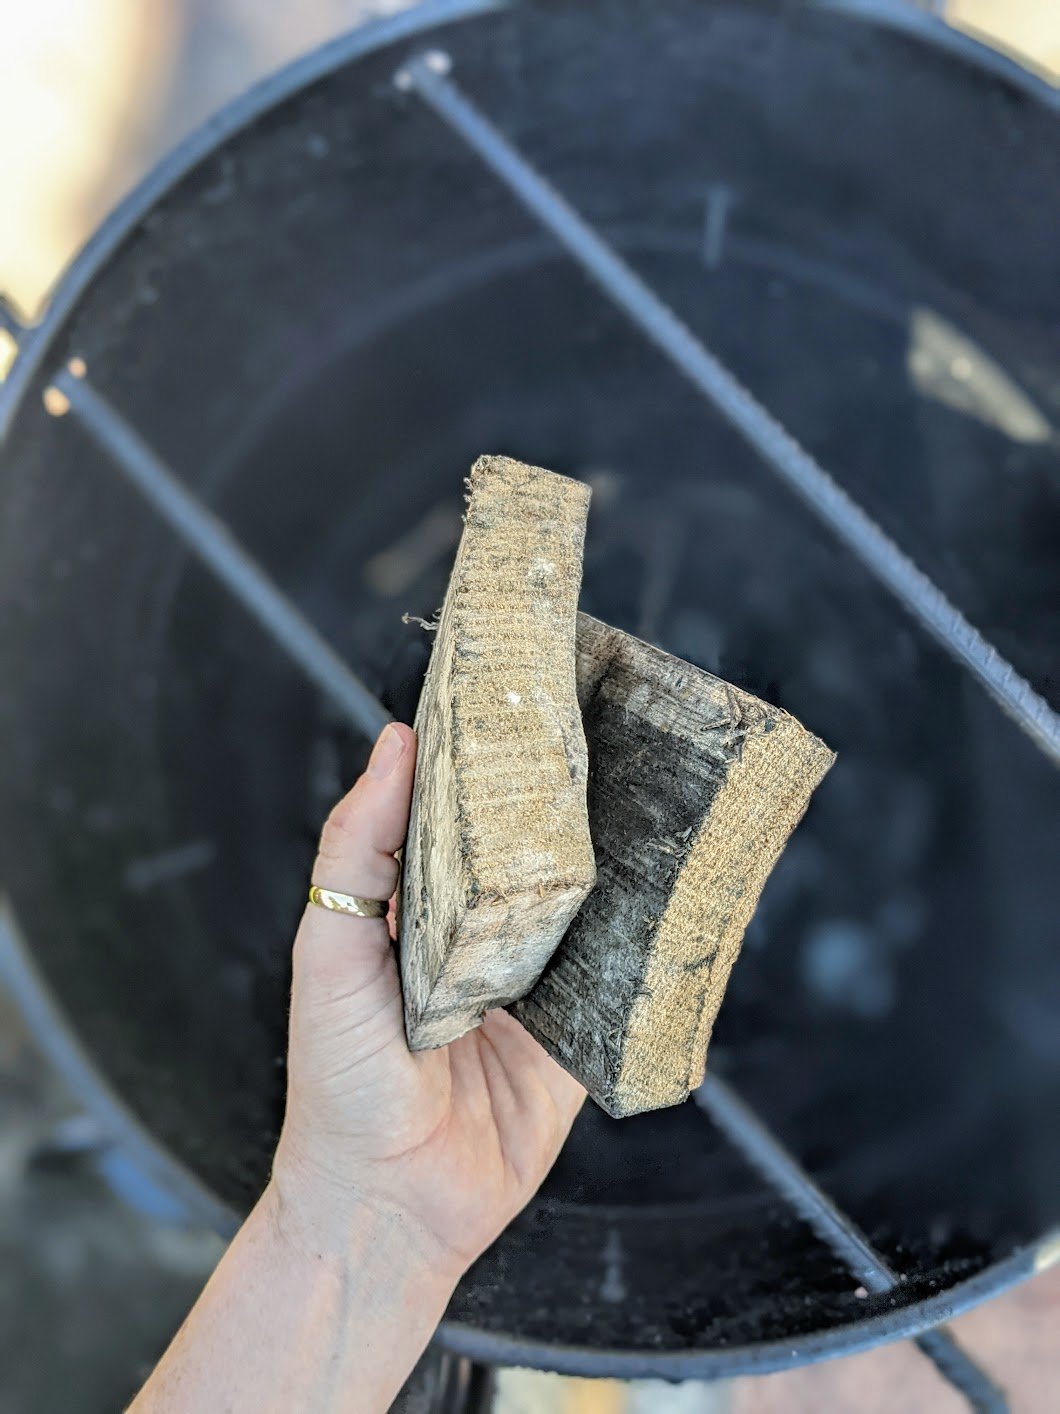 Jack Daniel's barrel chunks held above grill. 